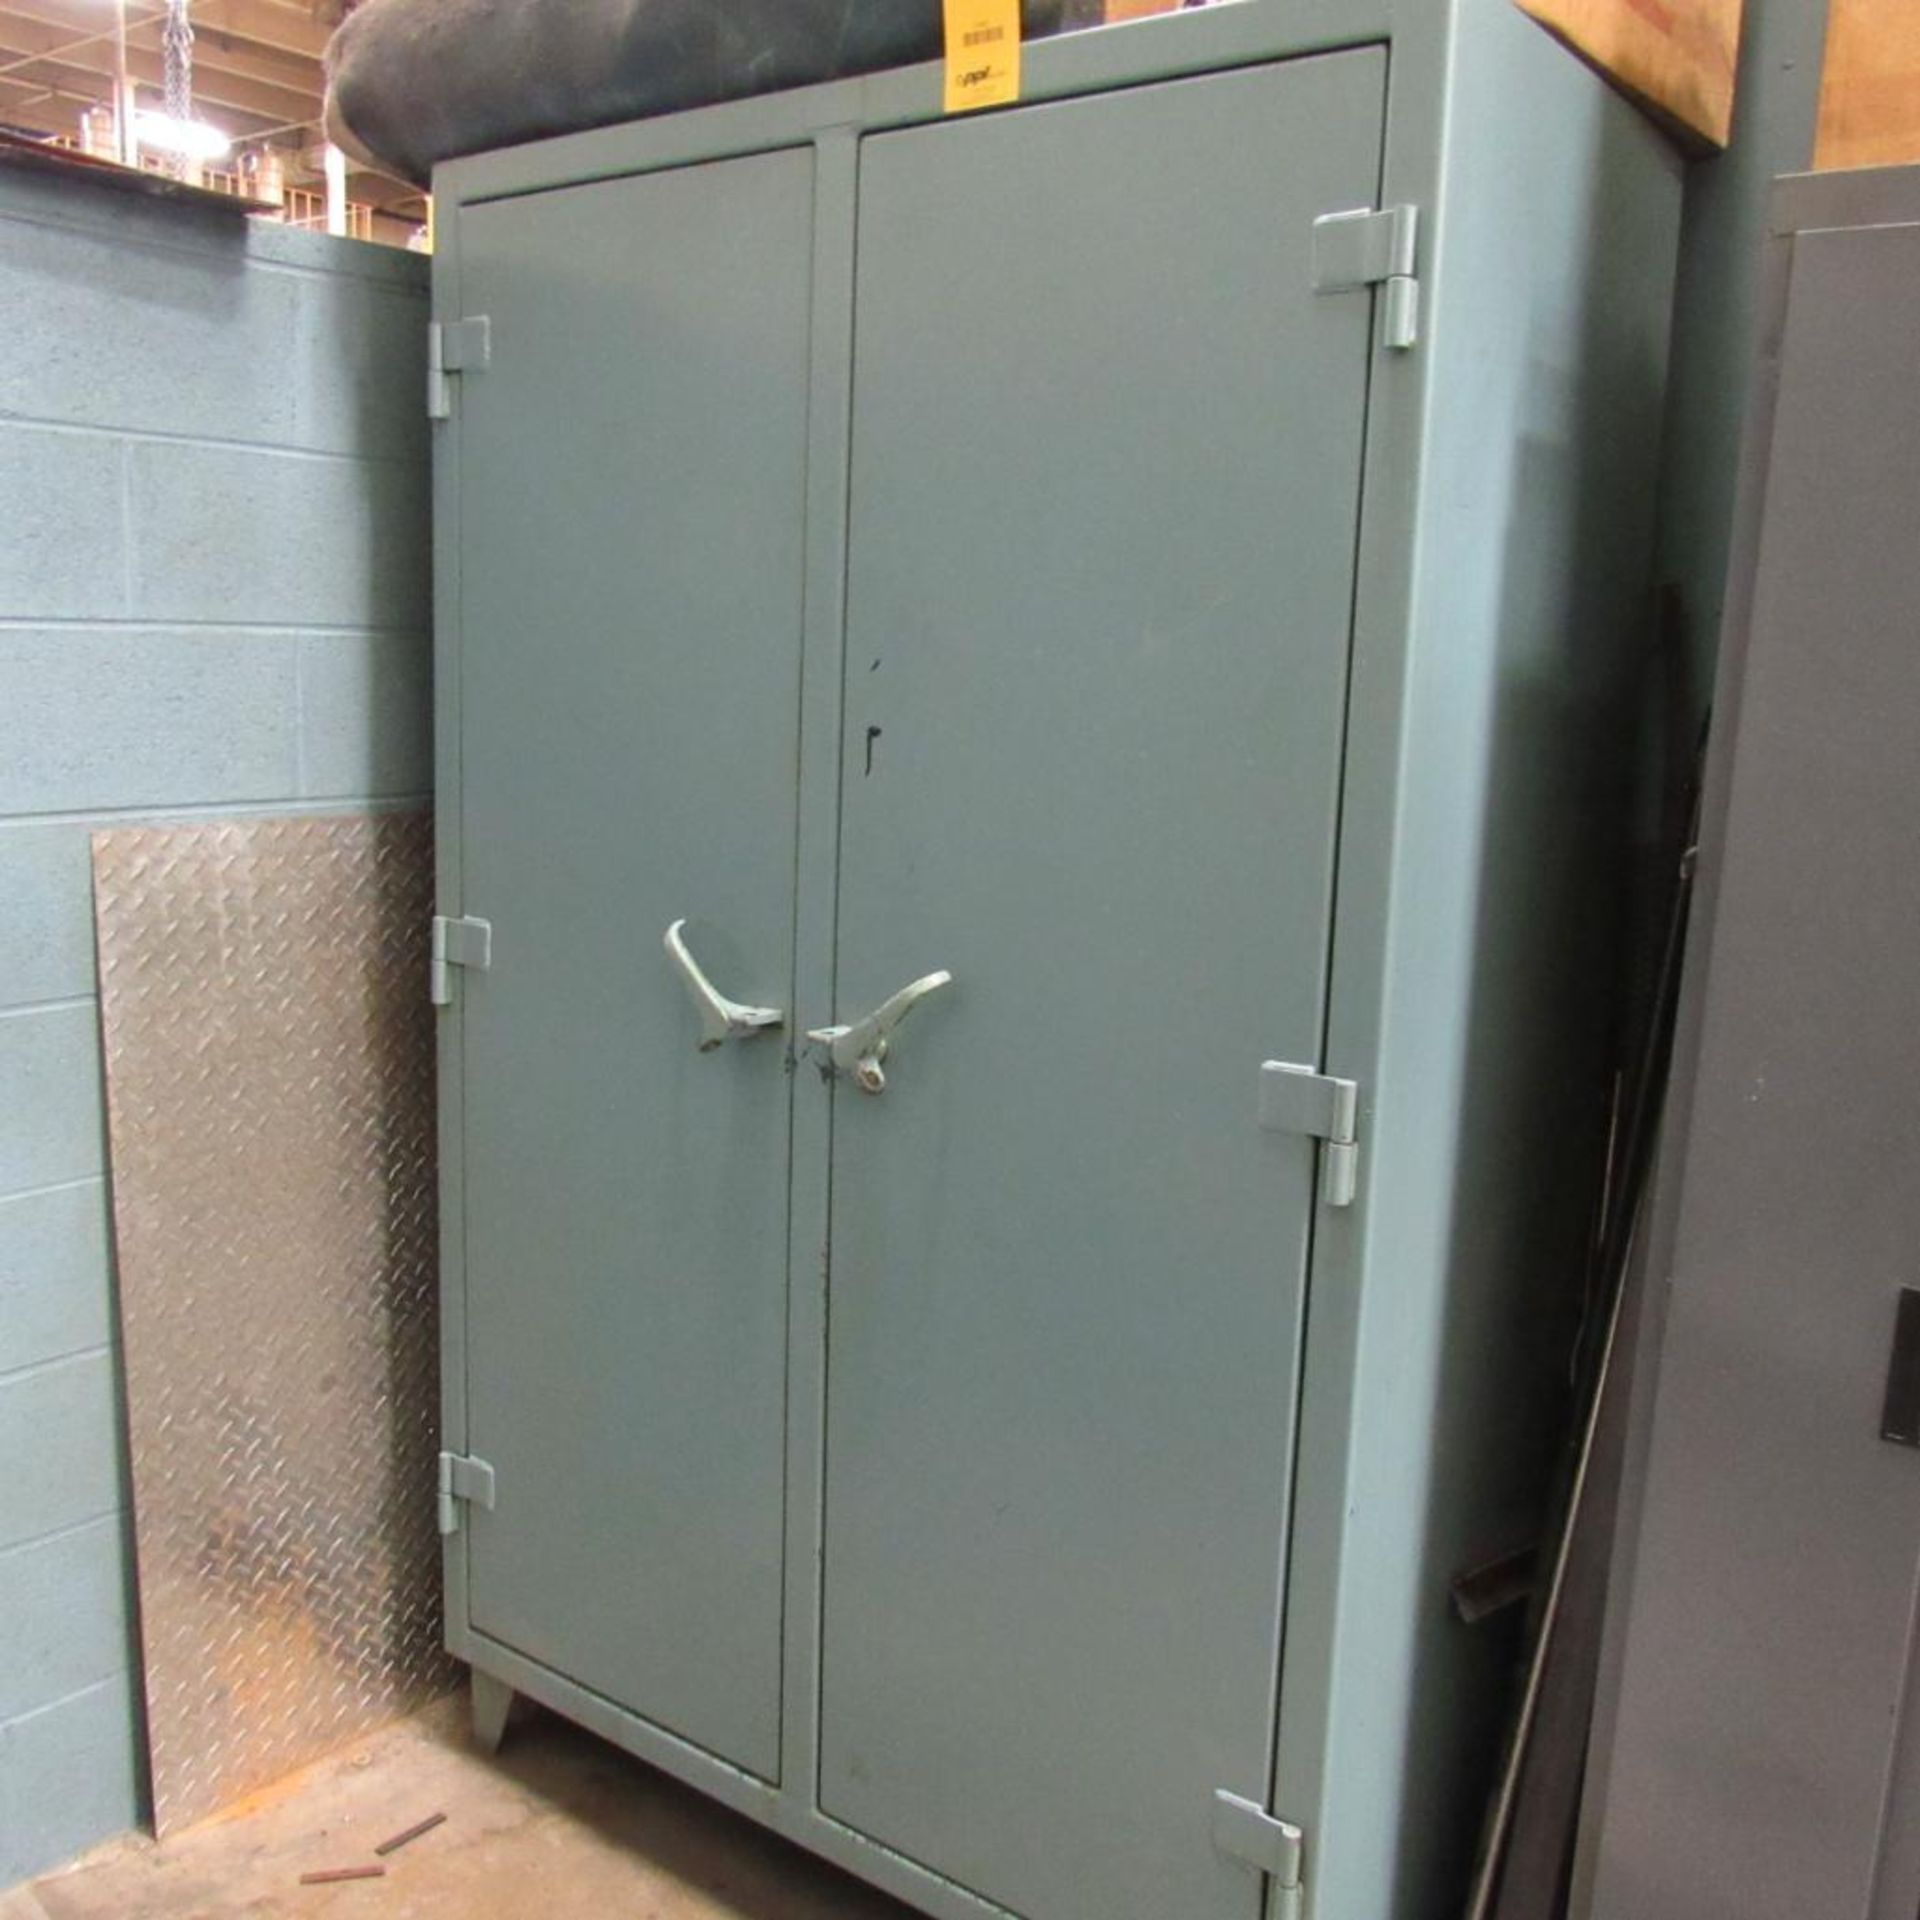 Lockable Steel Cabinet w/Welding Supplies (Location: Bldg. 1)